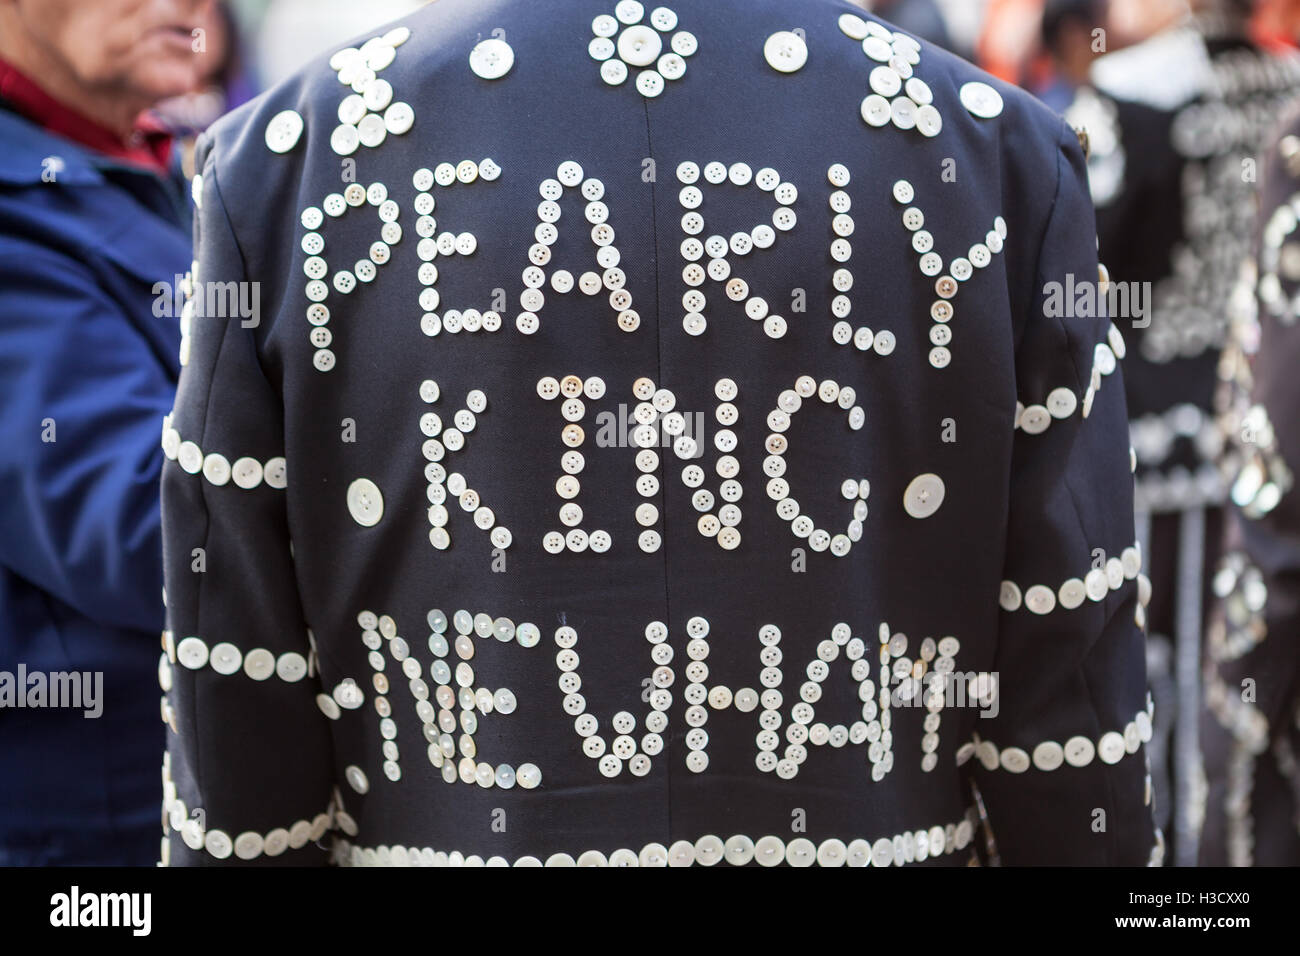 Die jährliche Pearly Kings und Queens & costermonger Erntefest Held in der Guildhall, London, UK Stockfoto